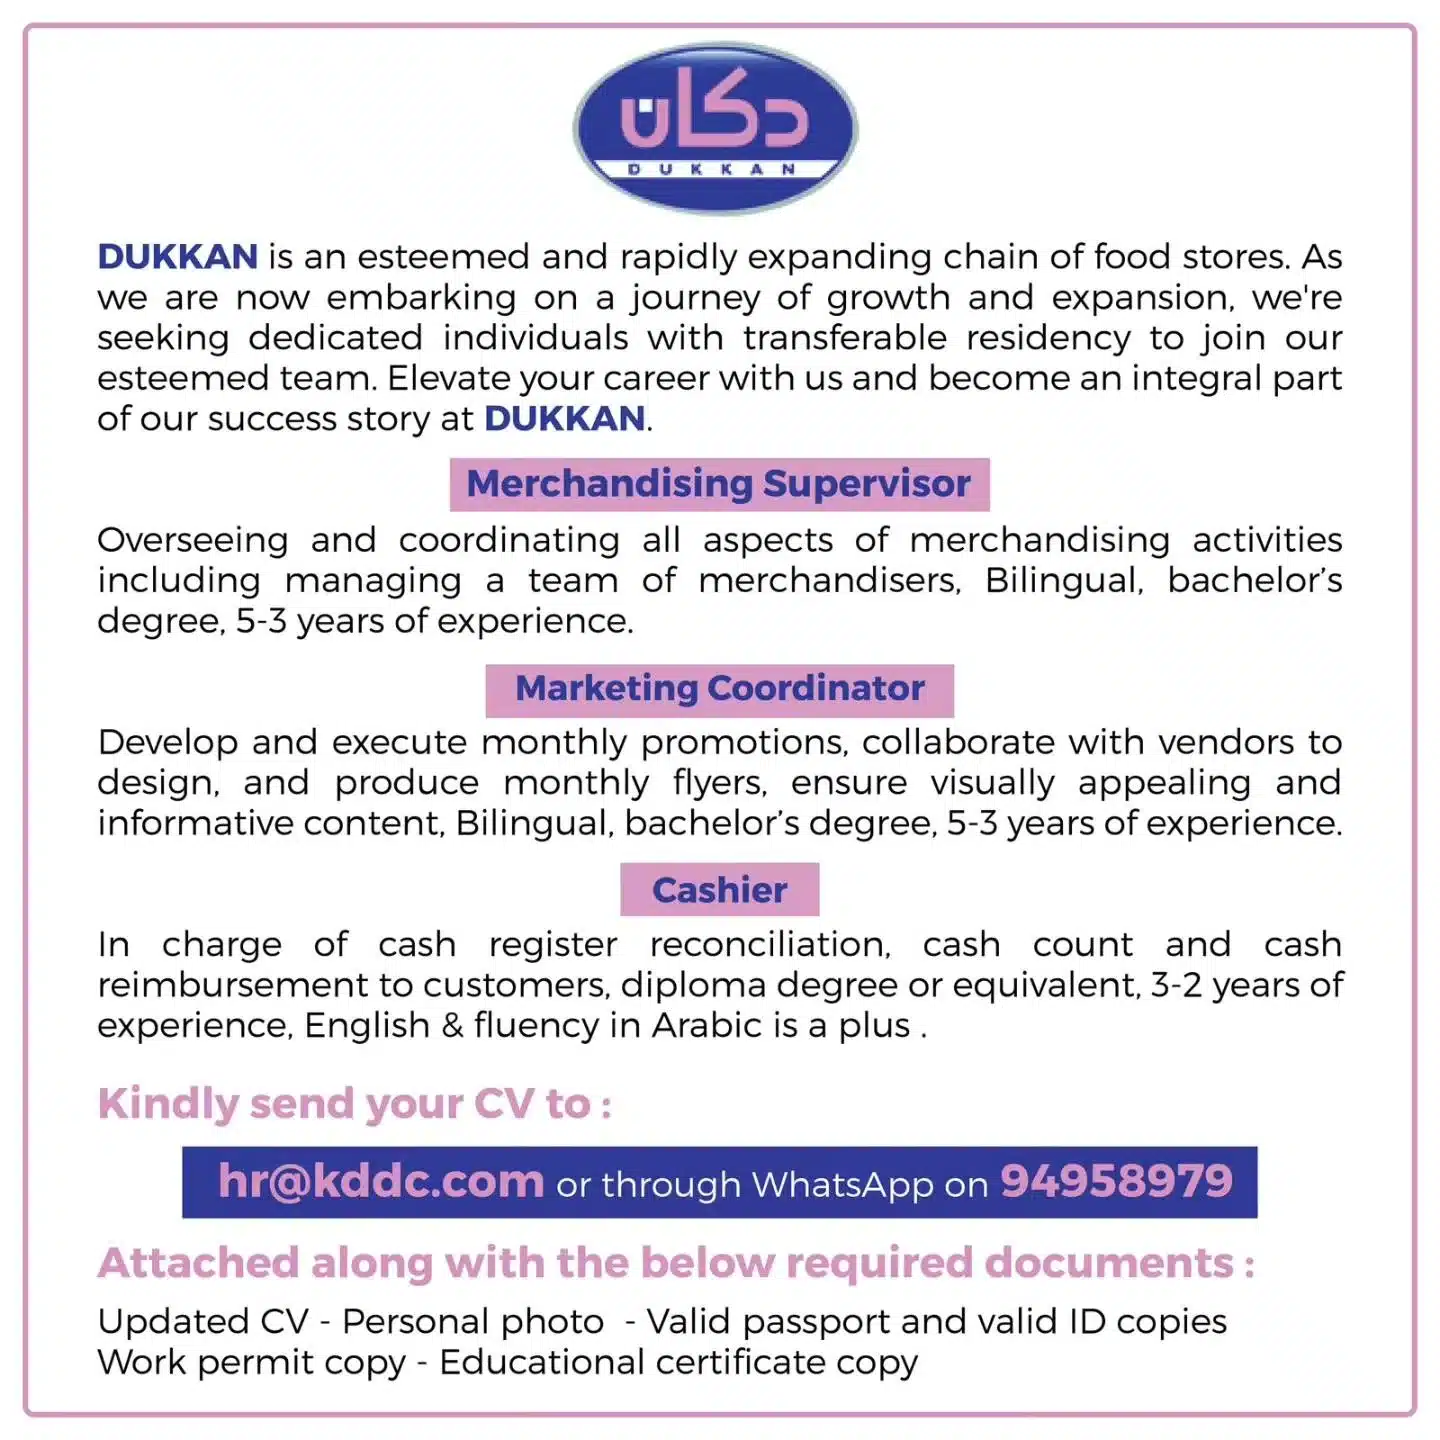  KDDC Jobs in Kuwait - Apply Now iiQ8 latest jobs in Gulf